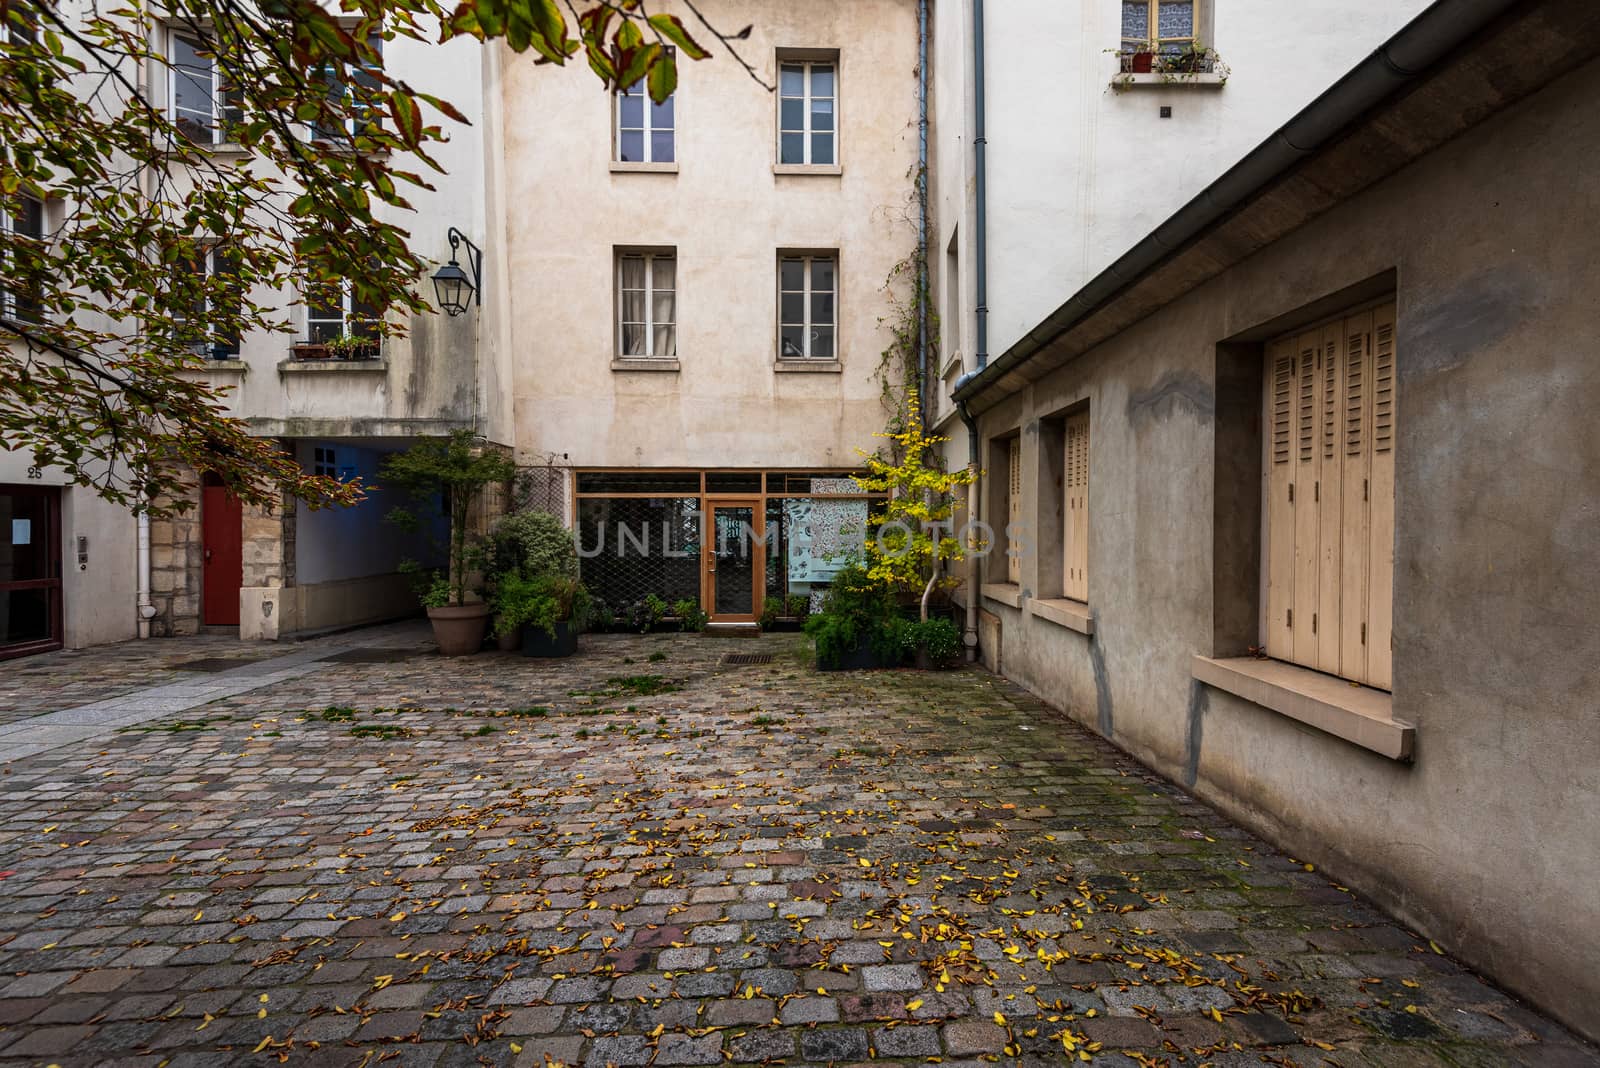 Small Courtyard in a Parisenne Neighborhood by jfbenning